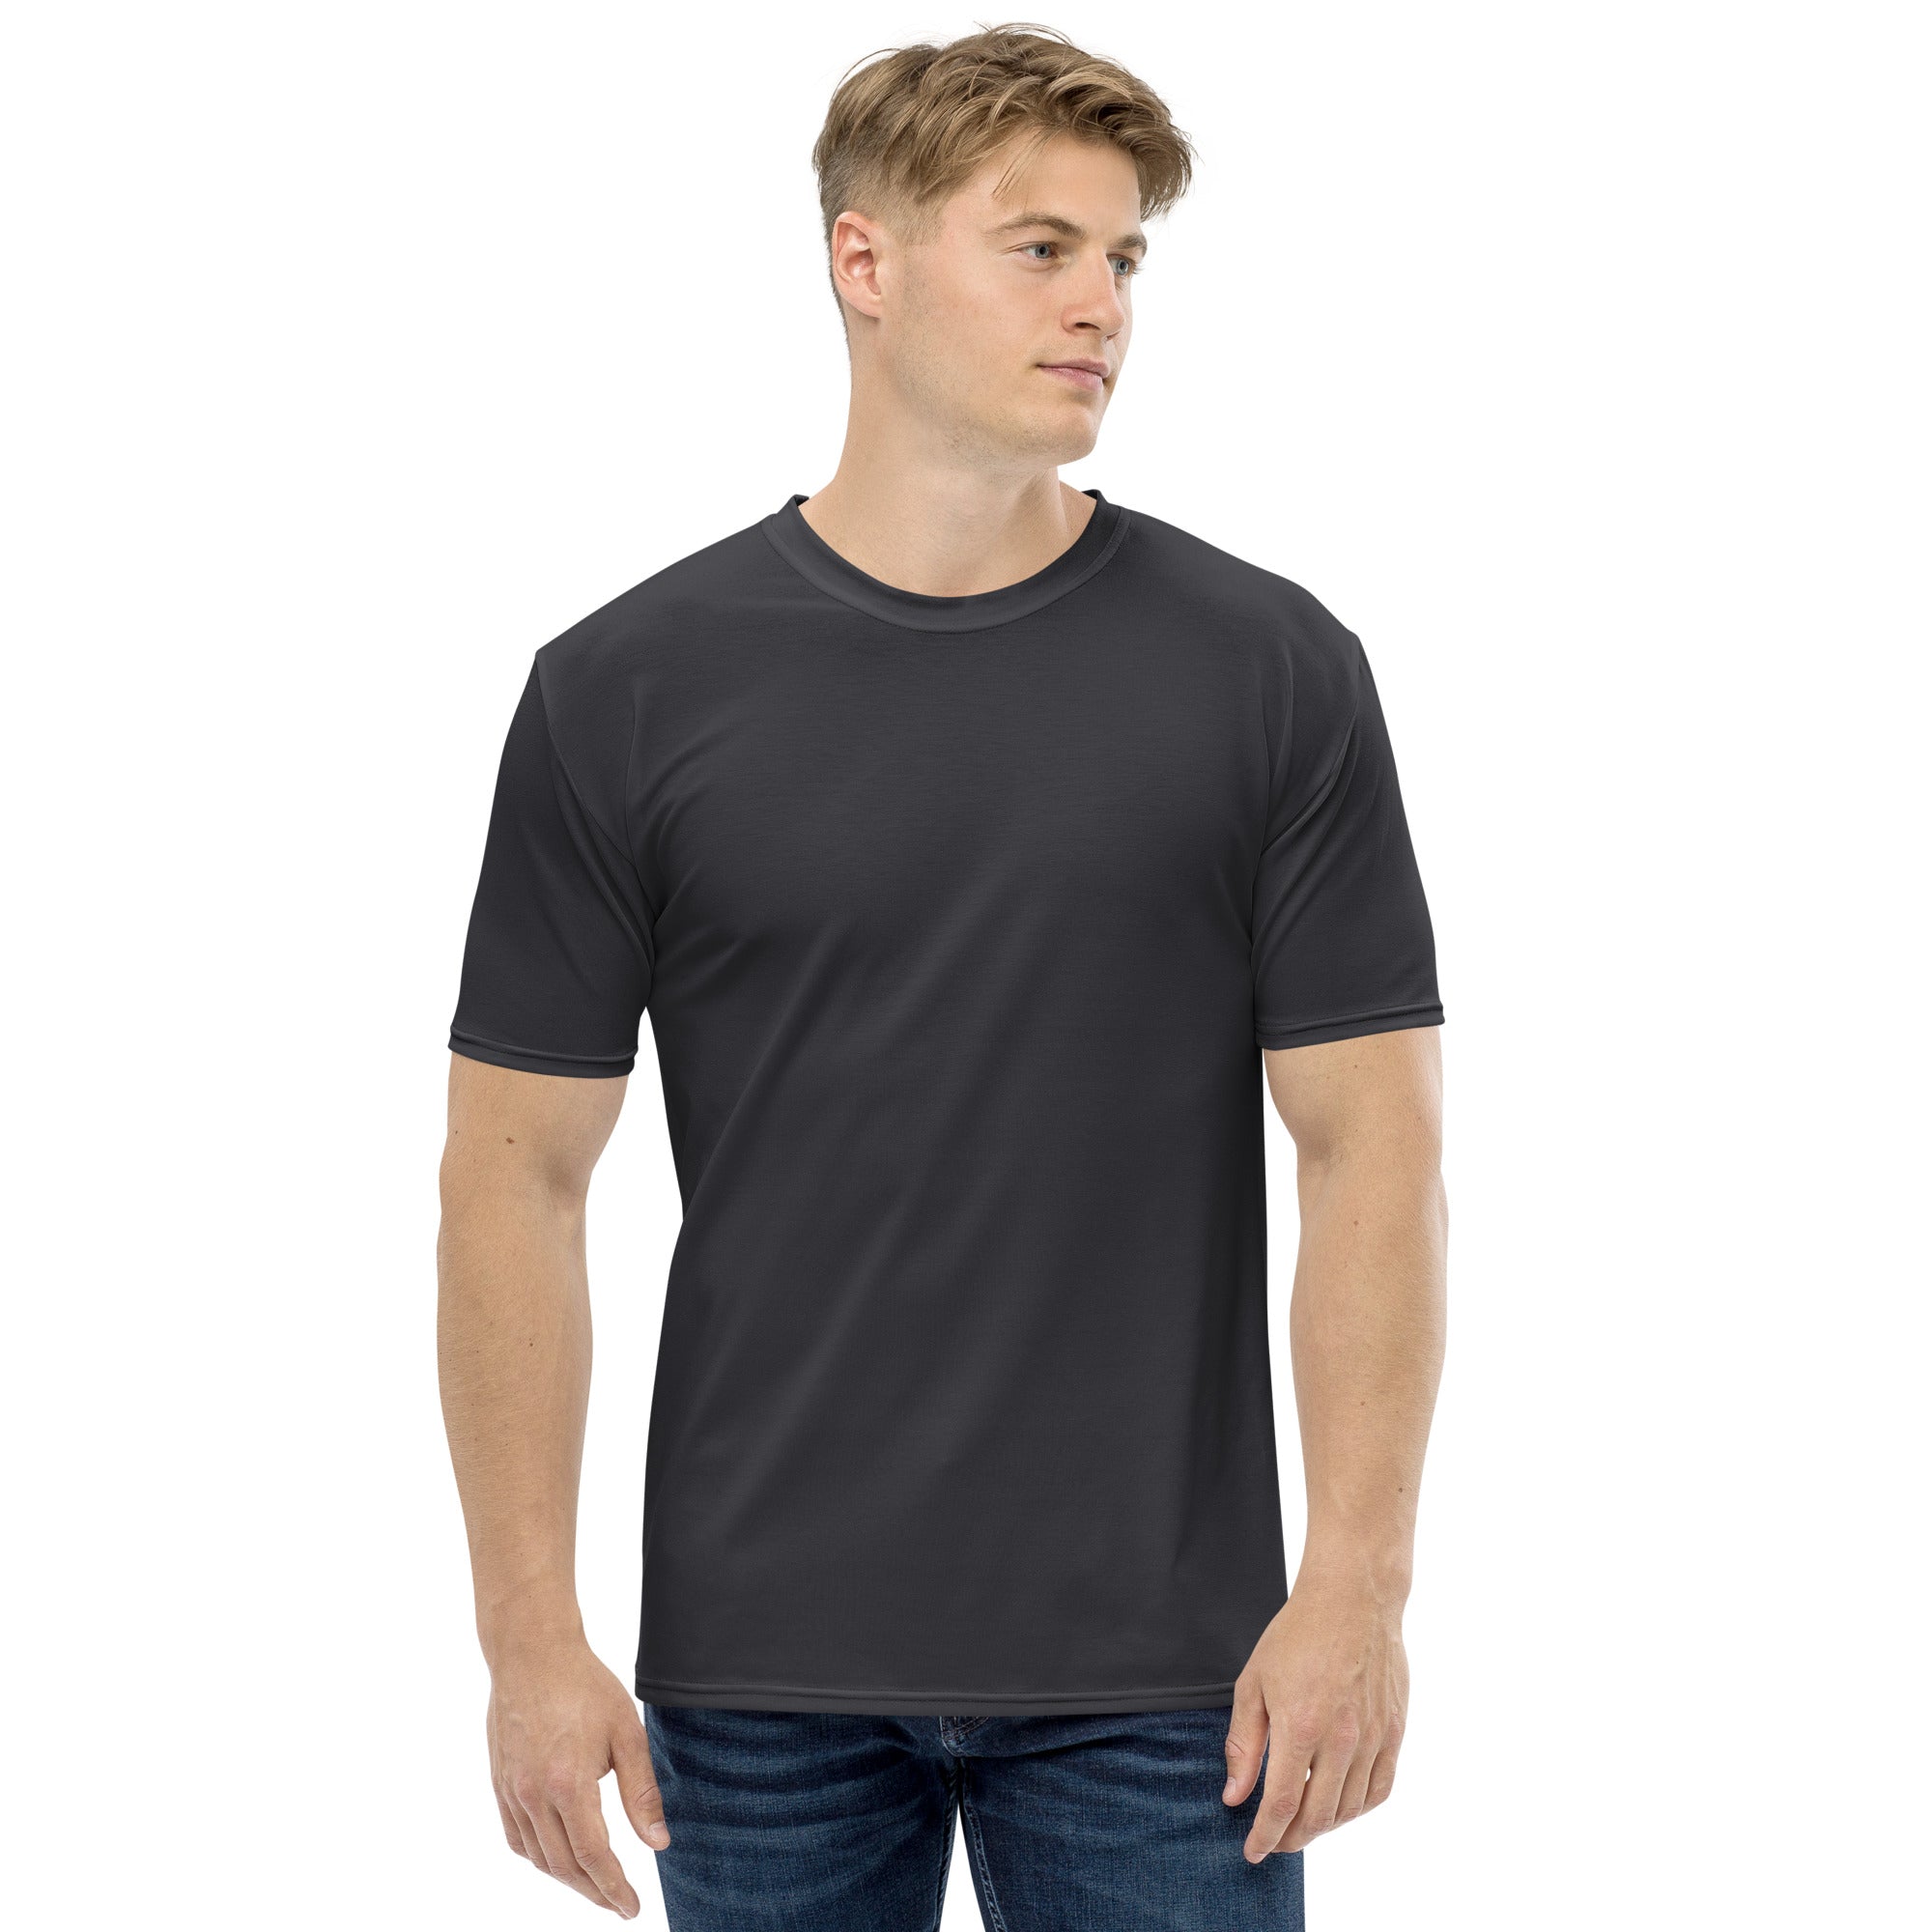 Charcoal Light Gray Men's T-shirt